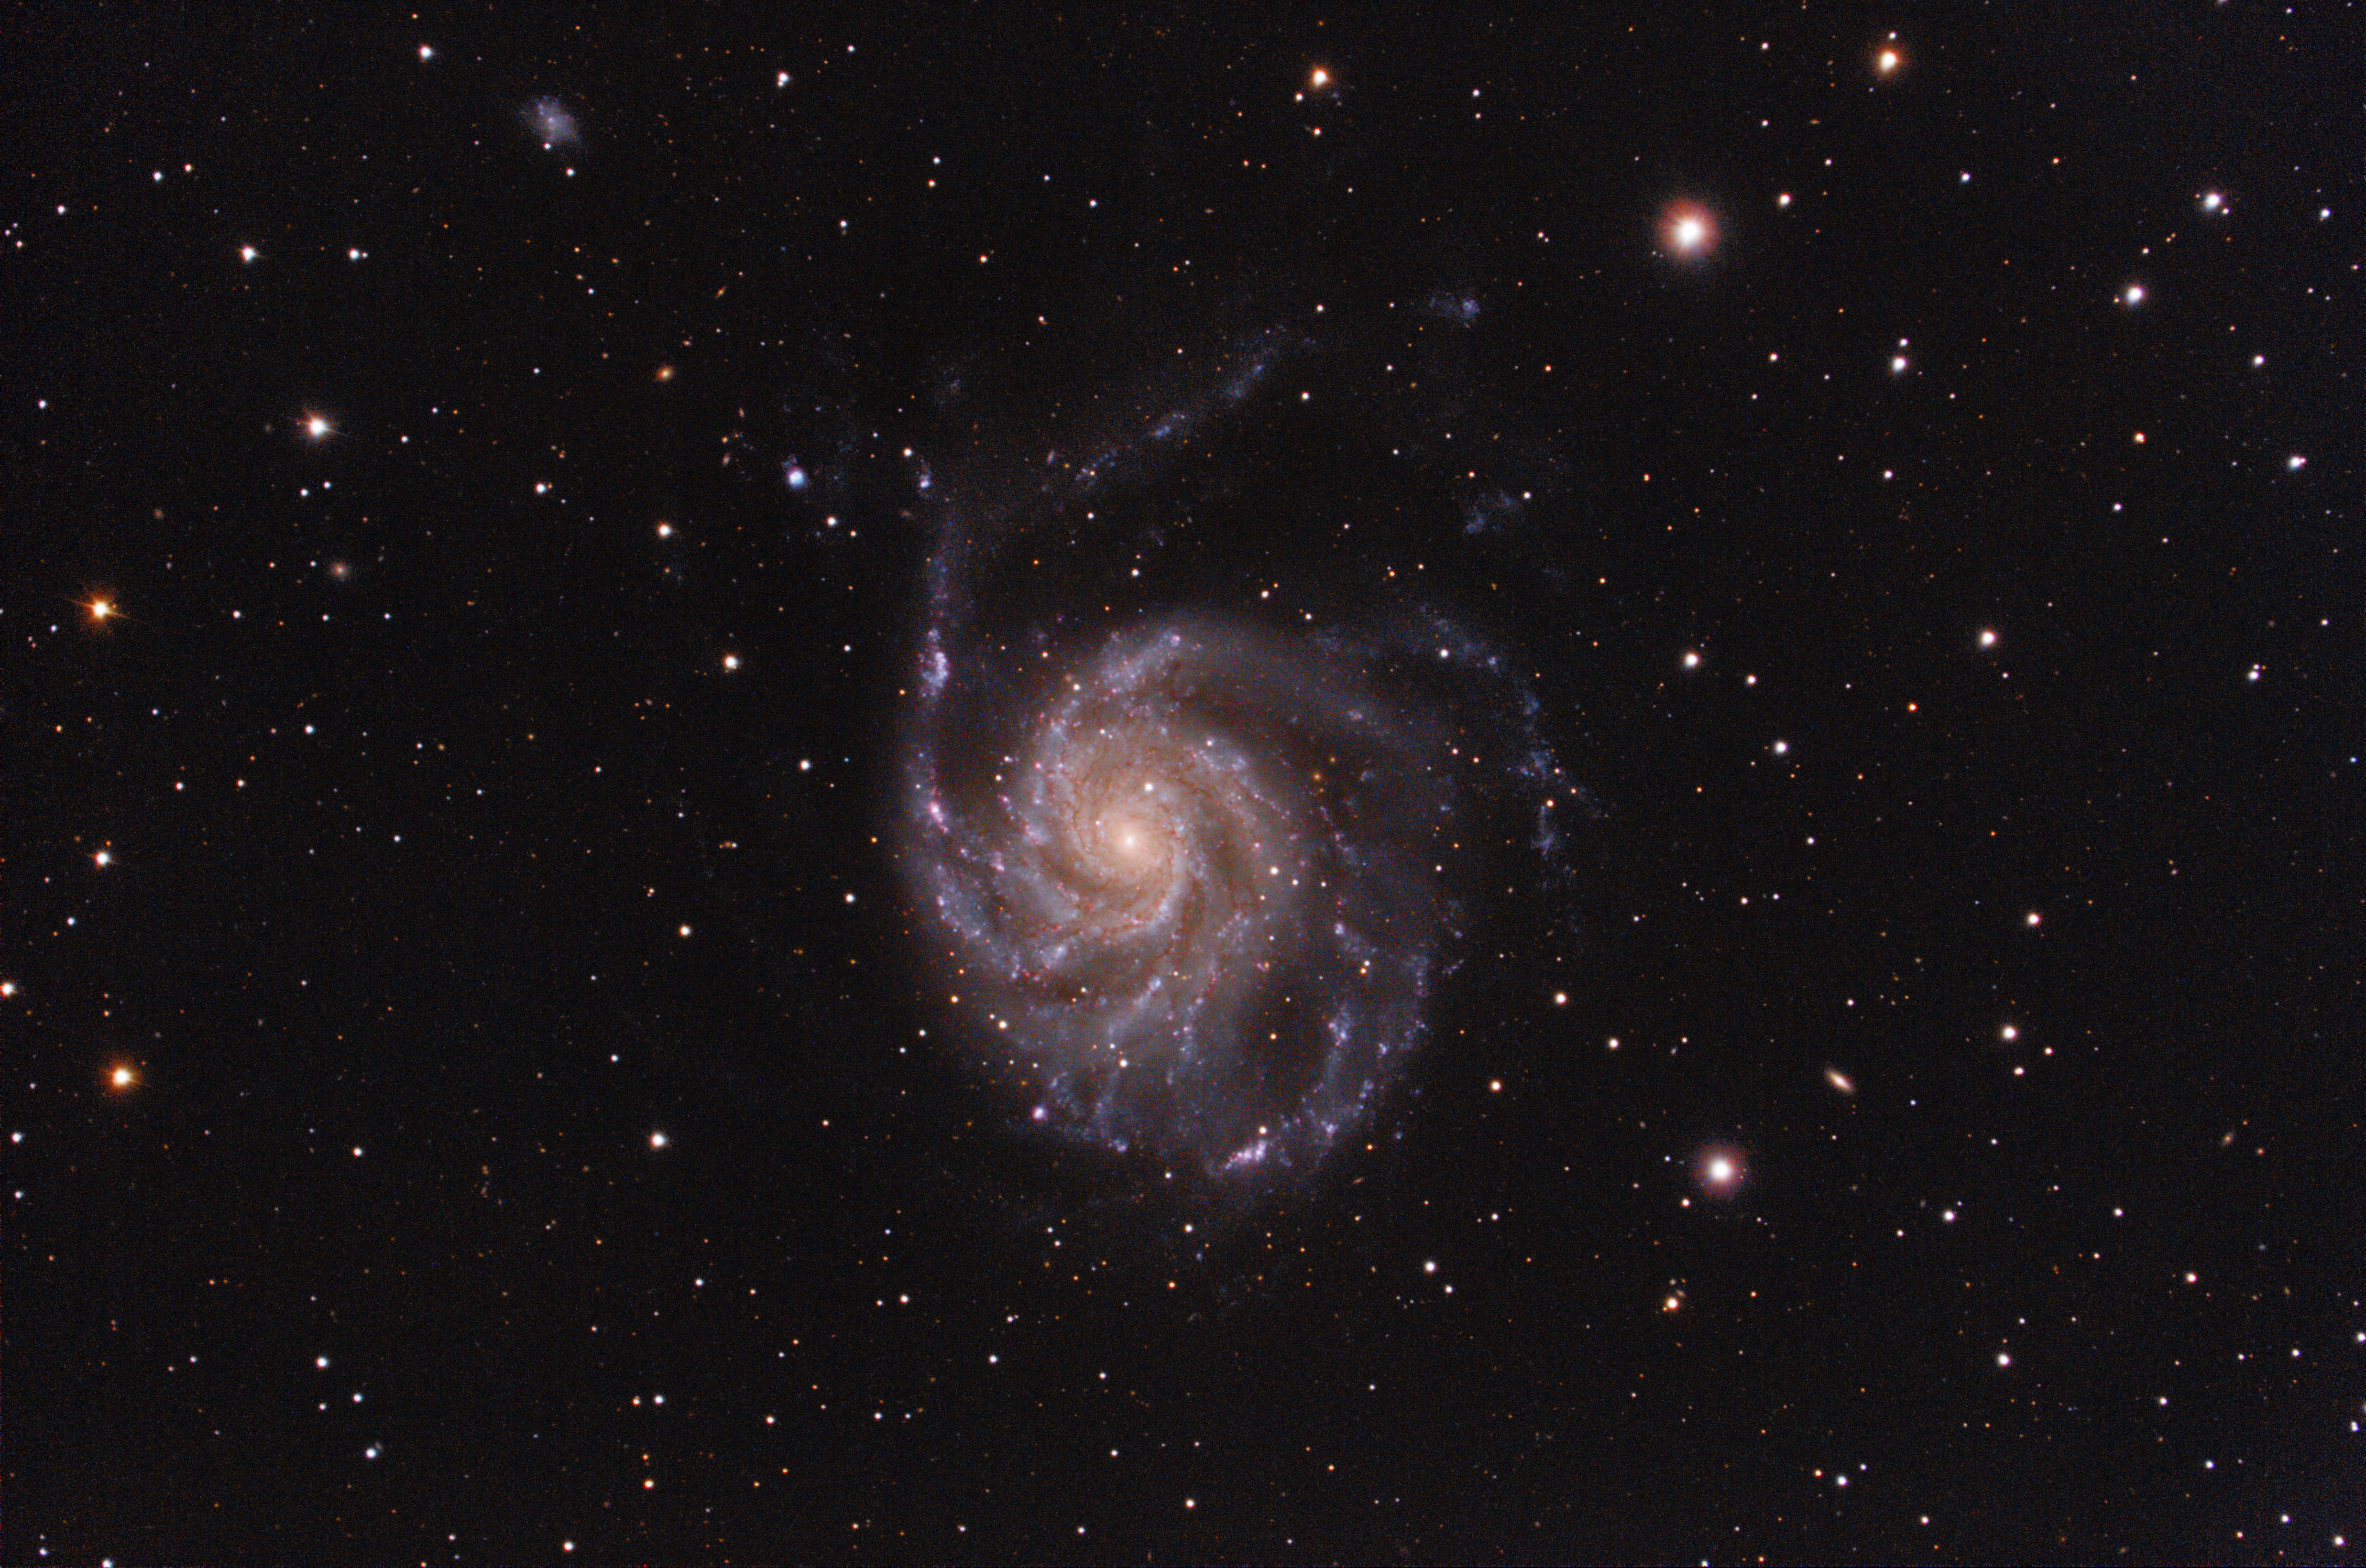 The Pinwheel galaxy - M101